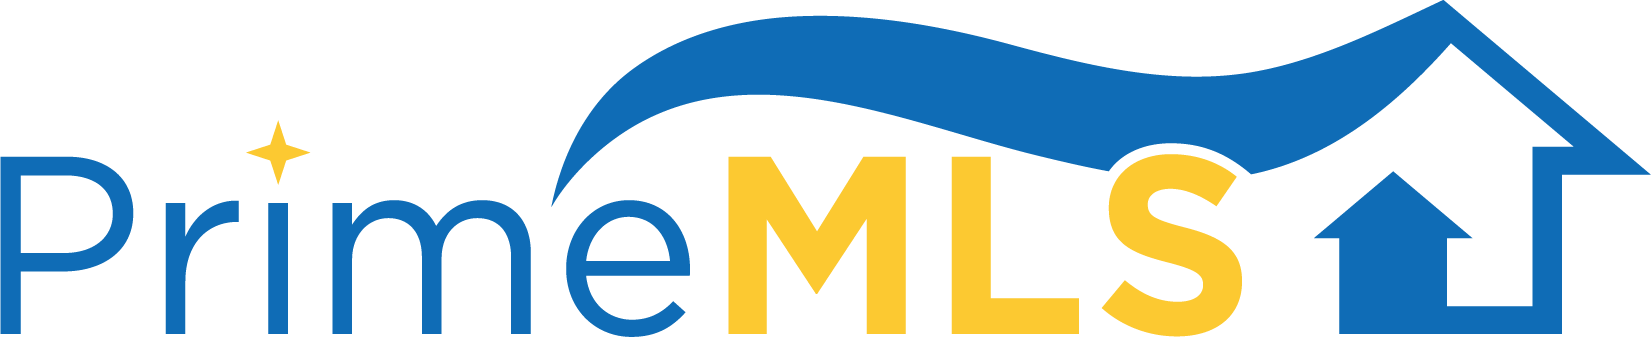 mls logo